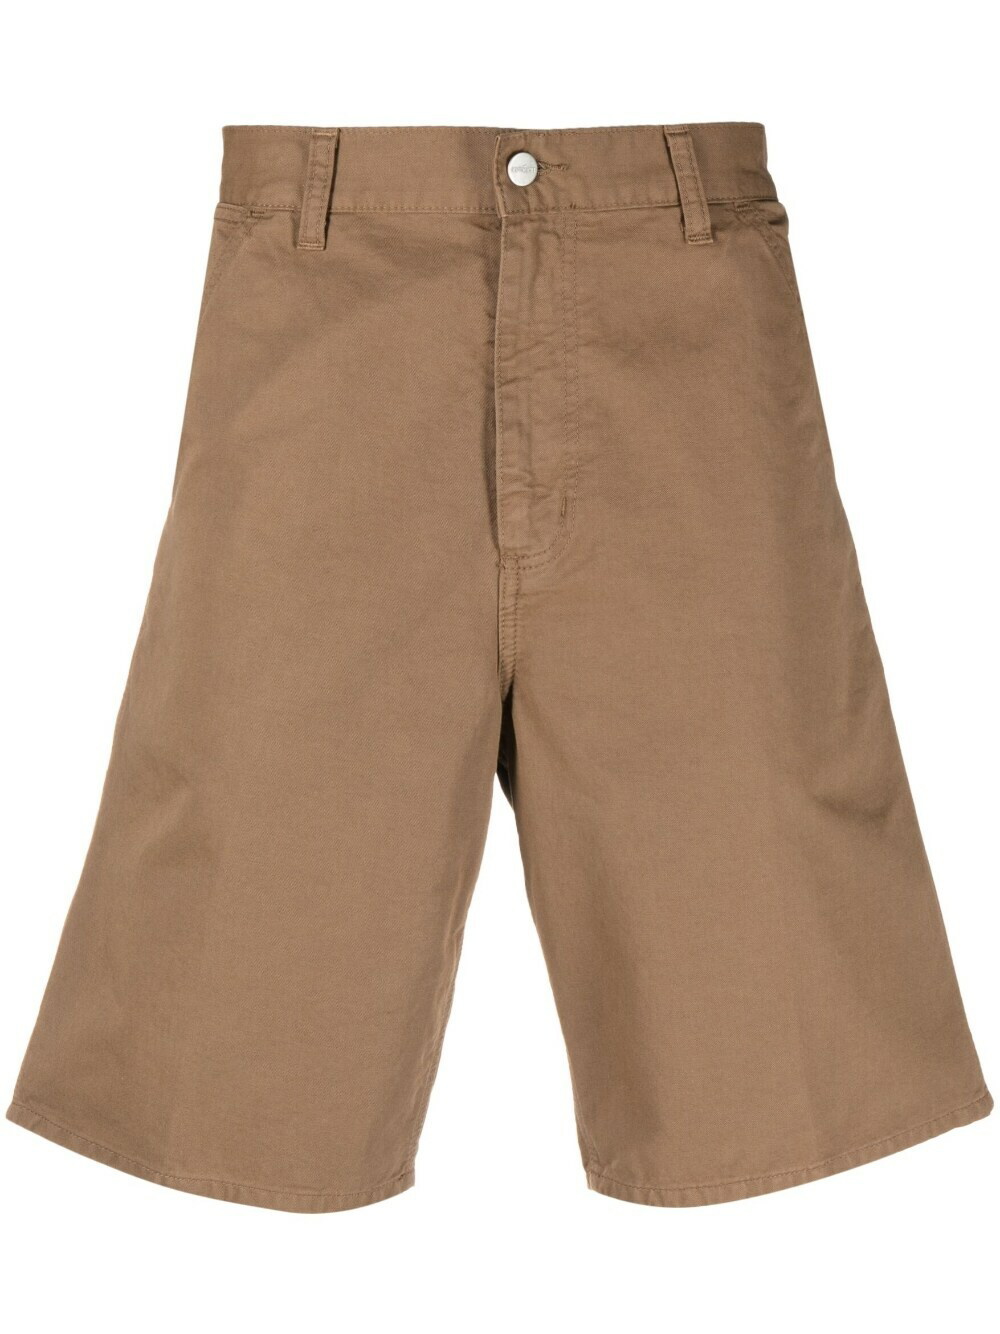 CARHARTT - Single Knee Cotton Shorts